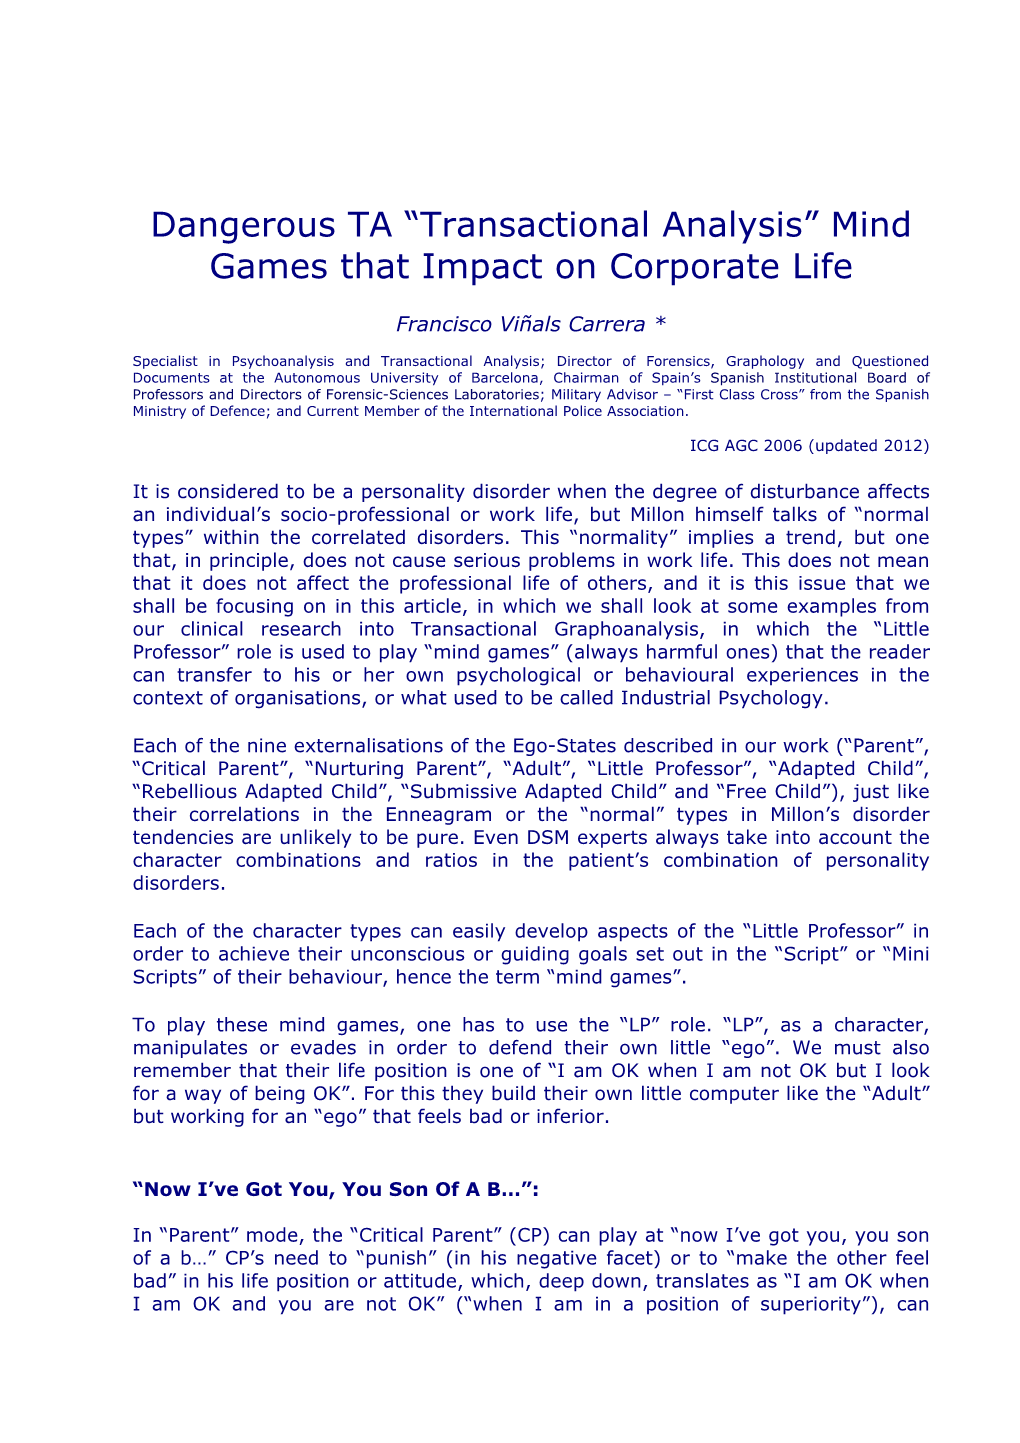 Dangerous TA “Transactional Analysis” Mind Games That Impact on Corporate Life